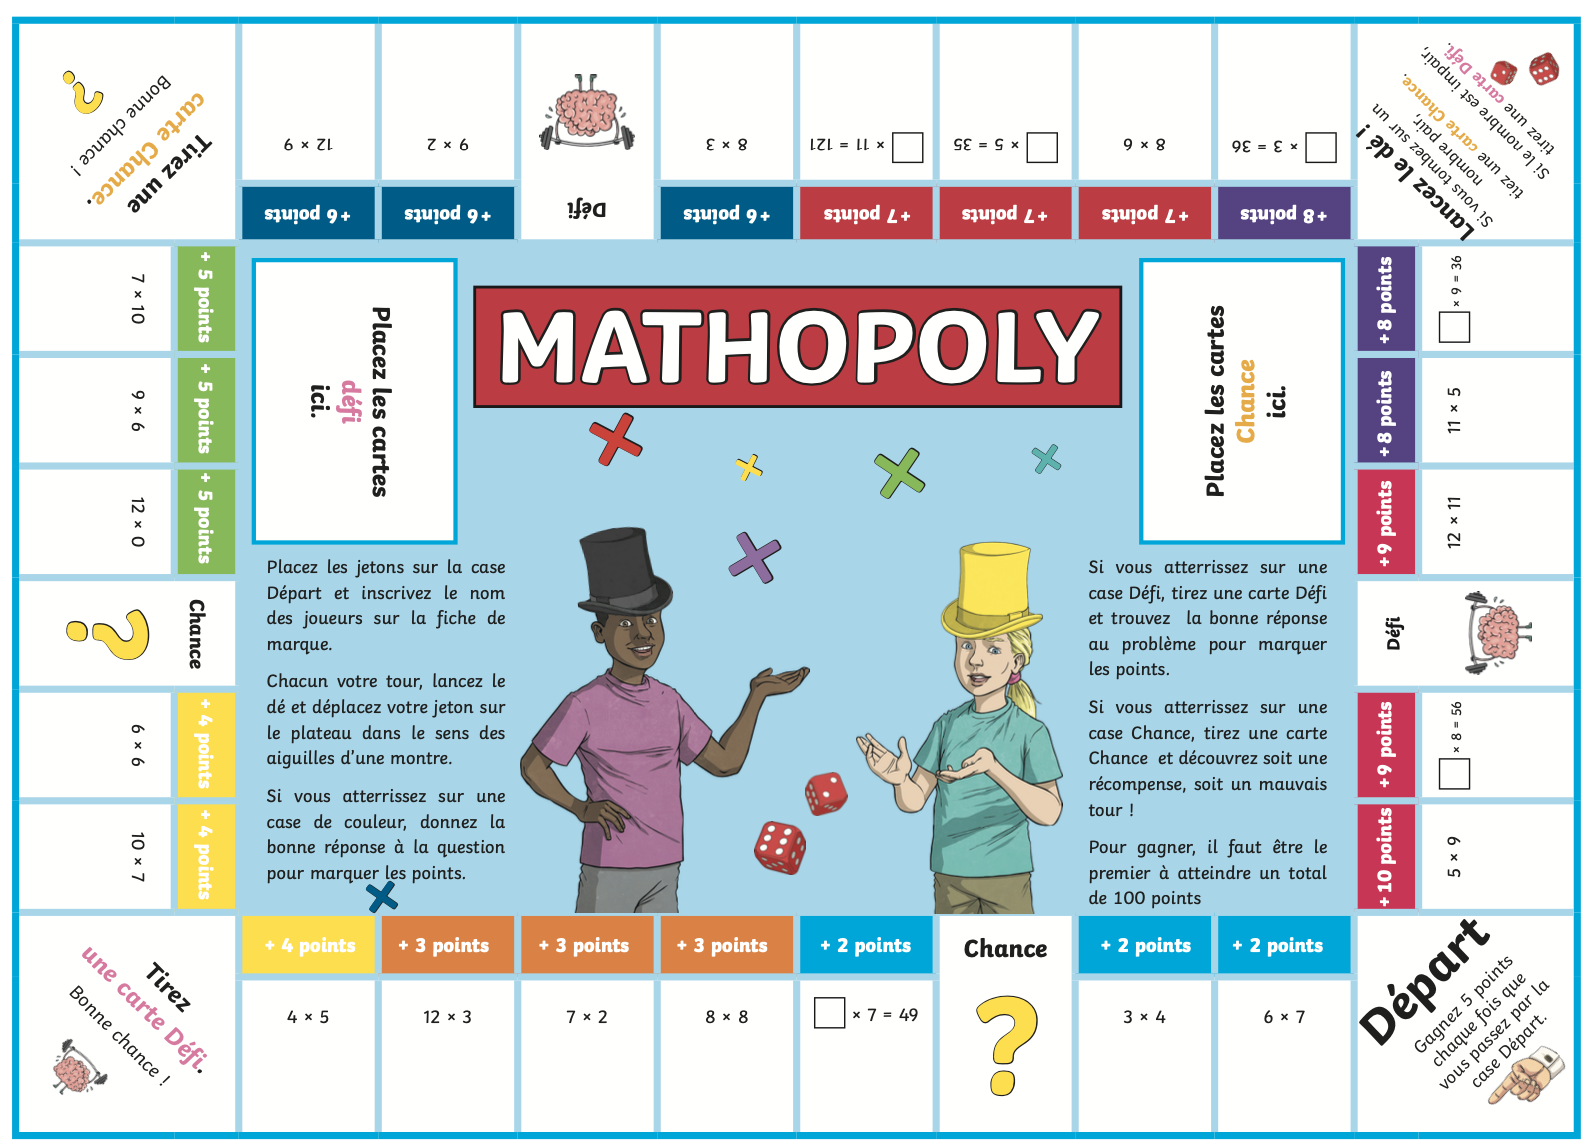 Mathopoly : le Monopoly des math!